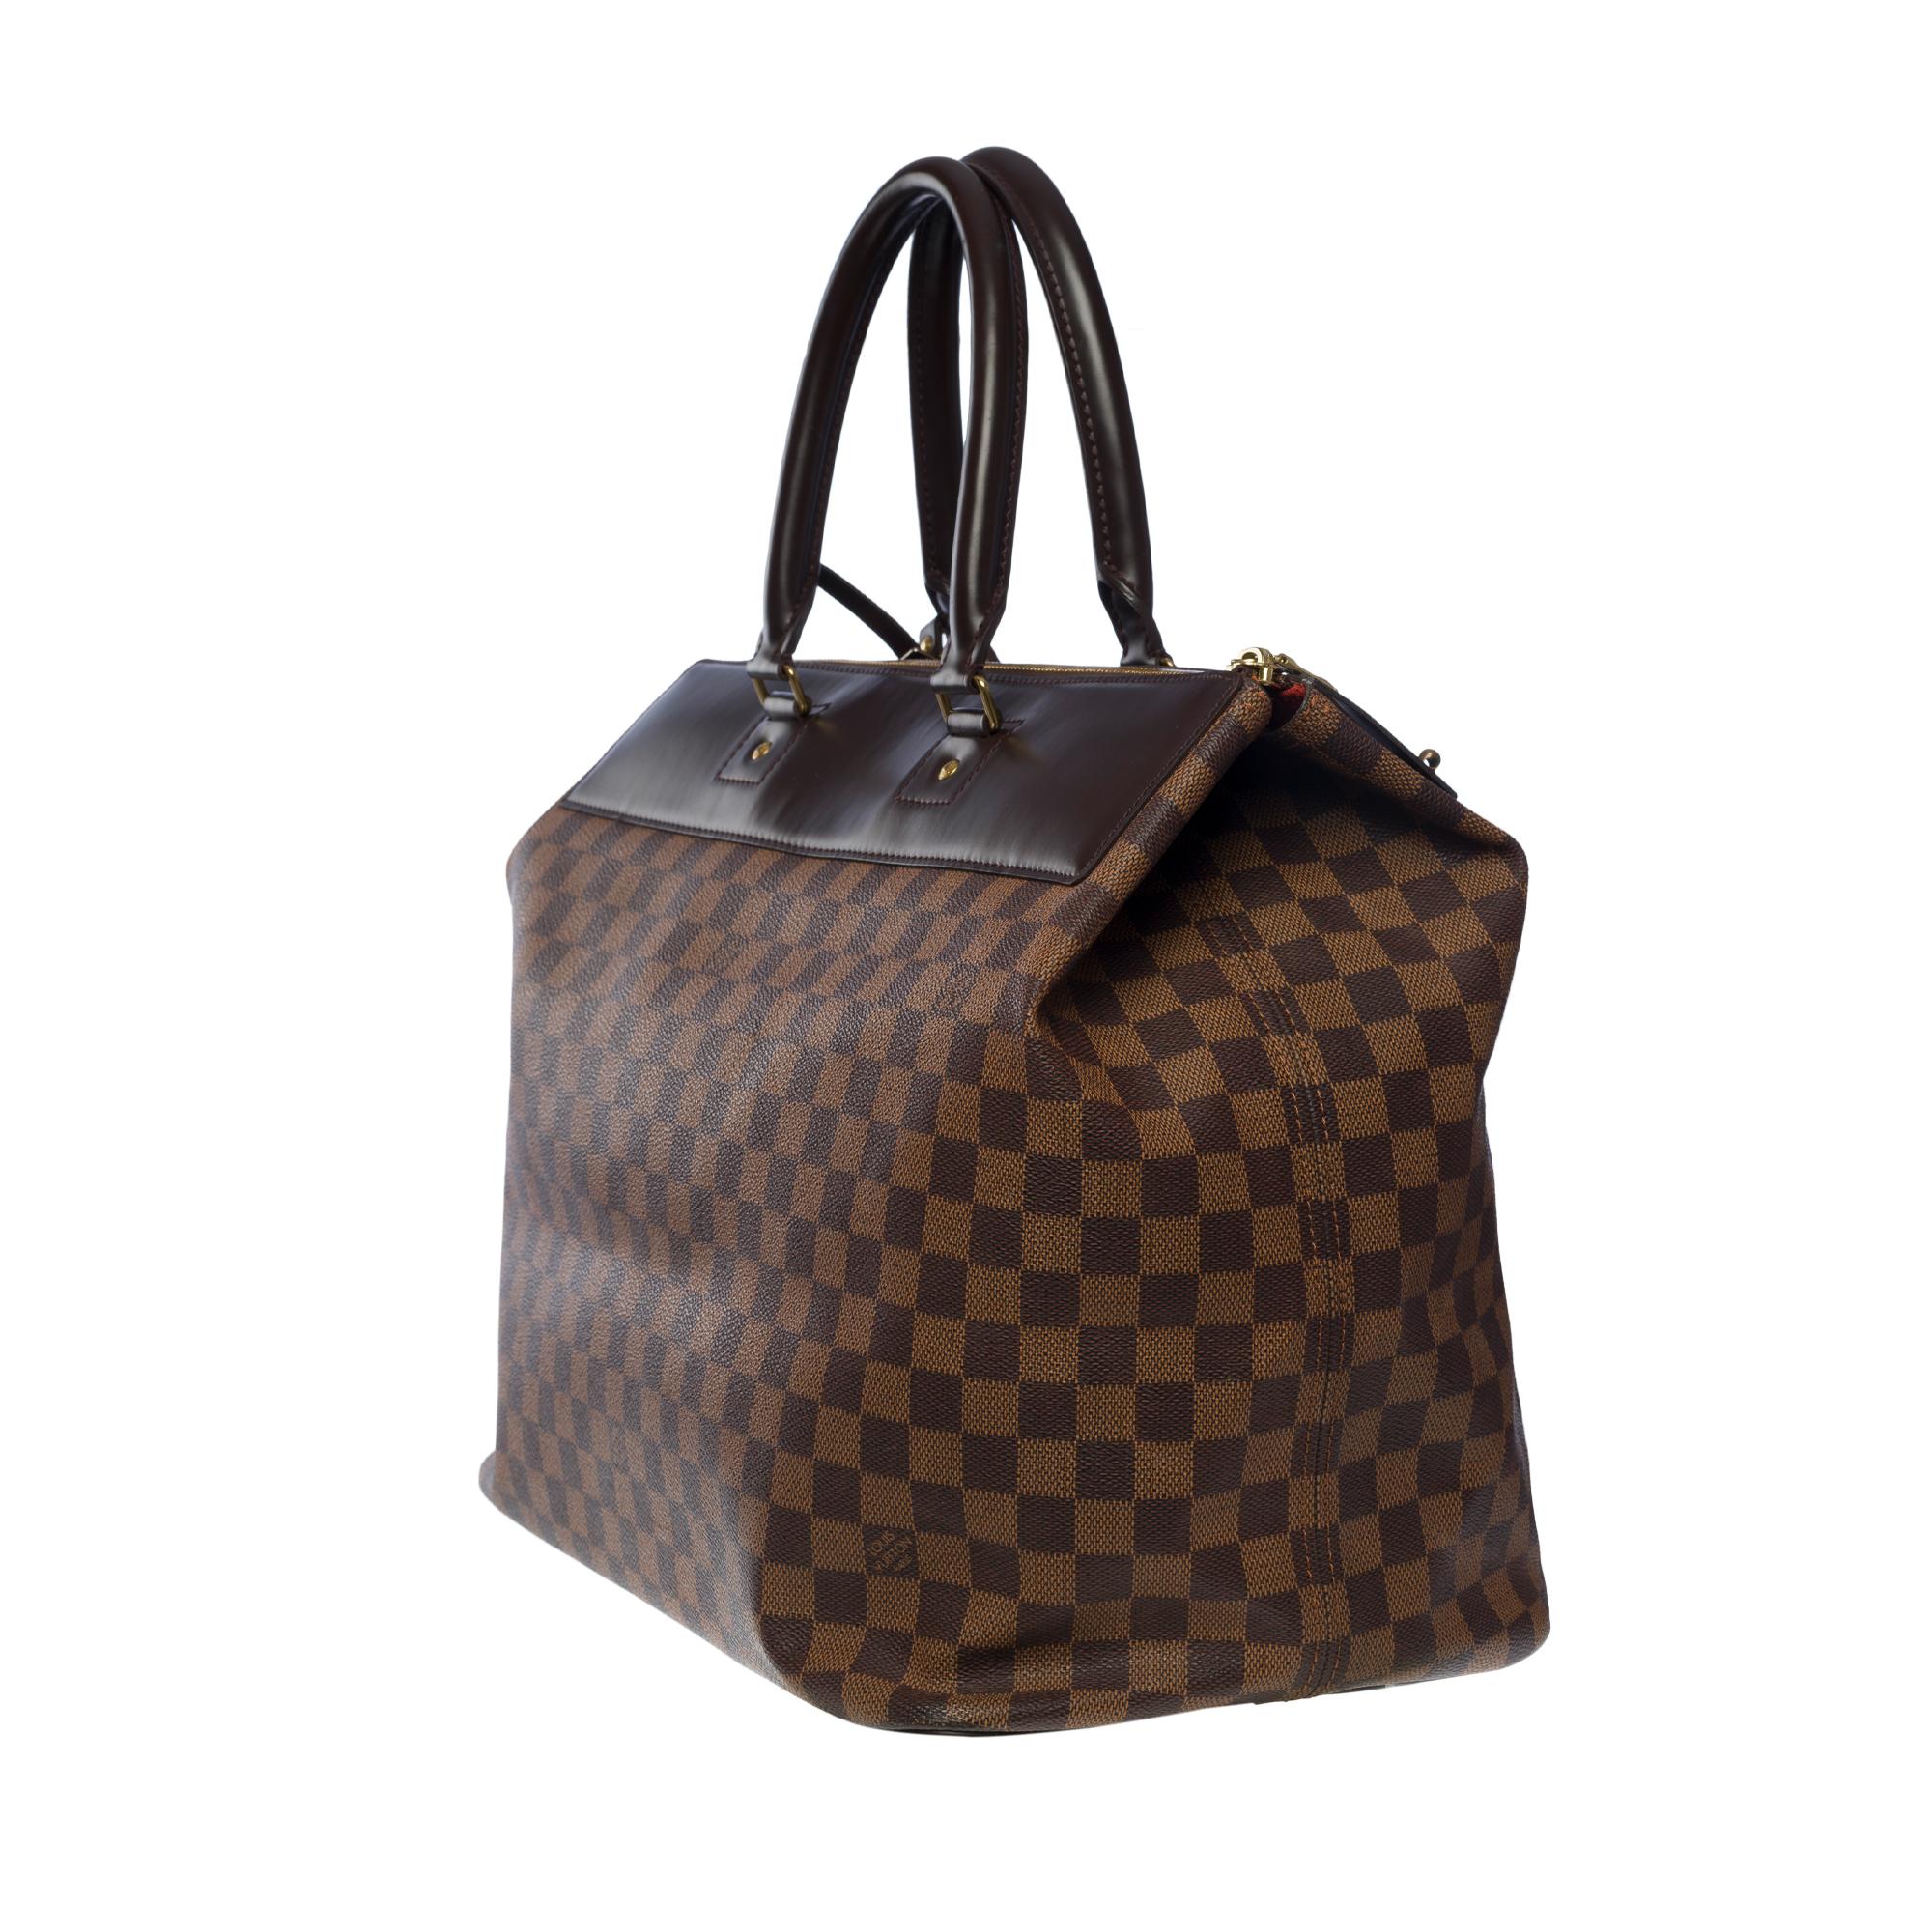 Women's or Men's Louis Vuitton Neo Greenwich travel bag in brown canvas, golden hardware